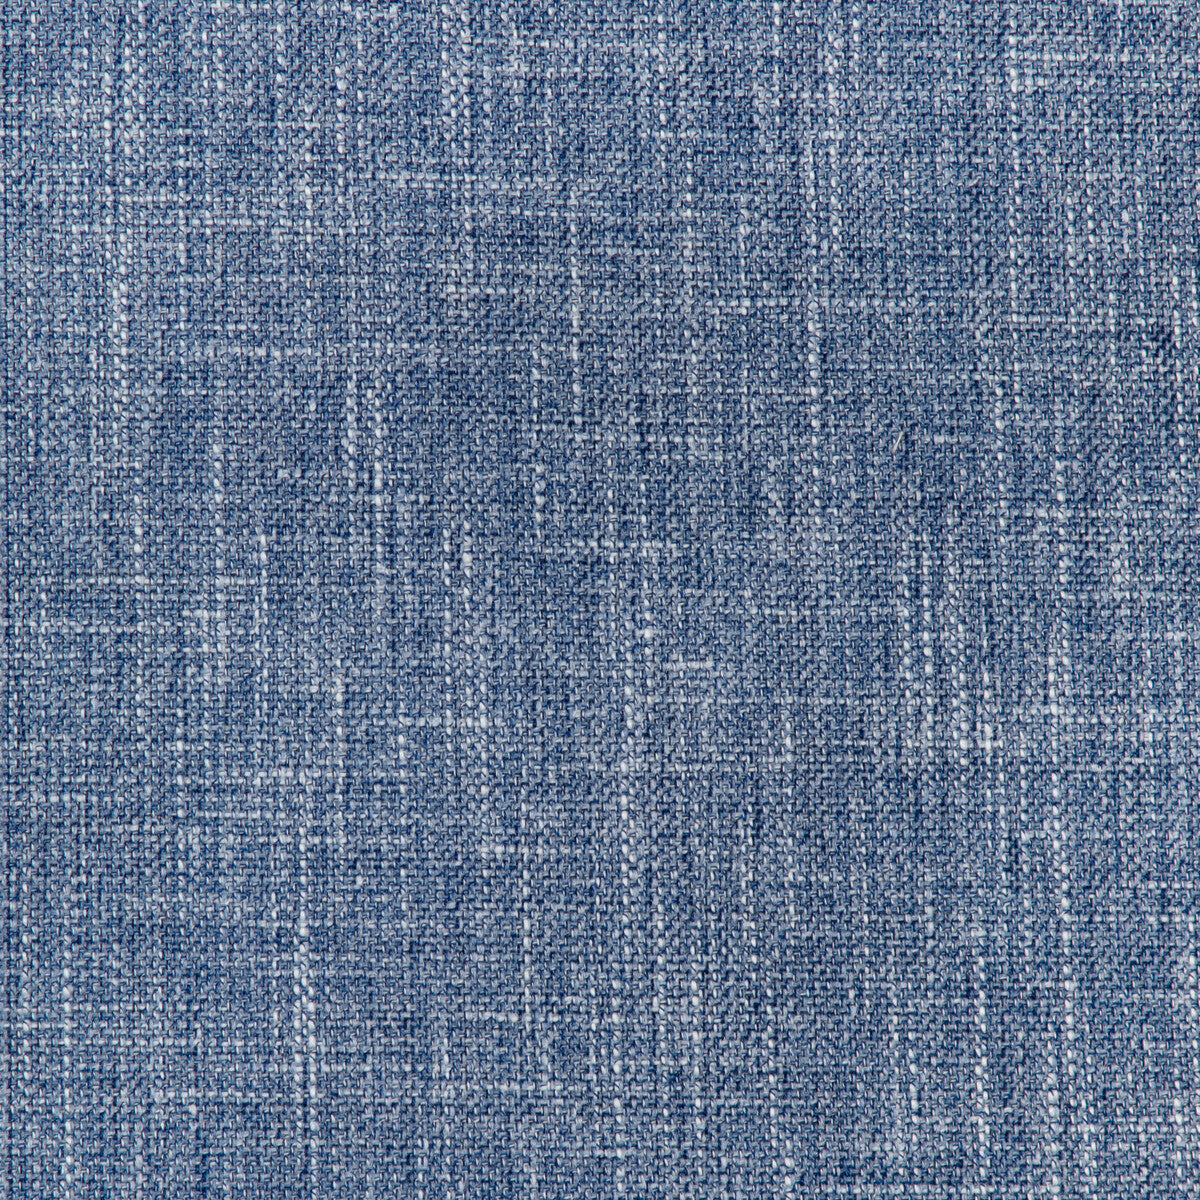 Kravet Smart fabric in 37065-51 color - pattern 37065.51.0 - by Kravet Smart